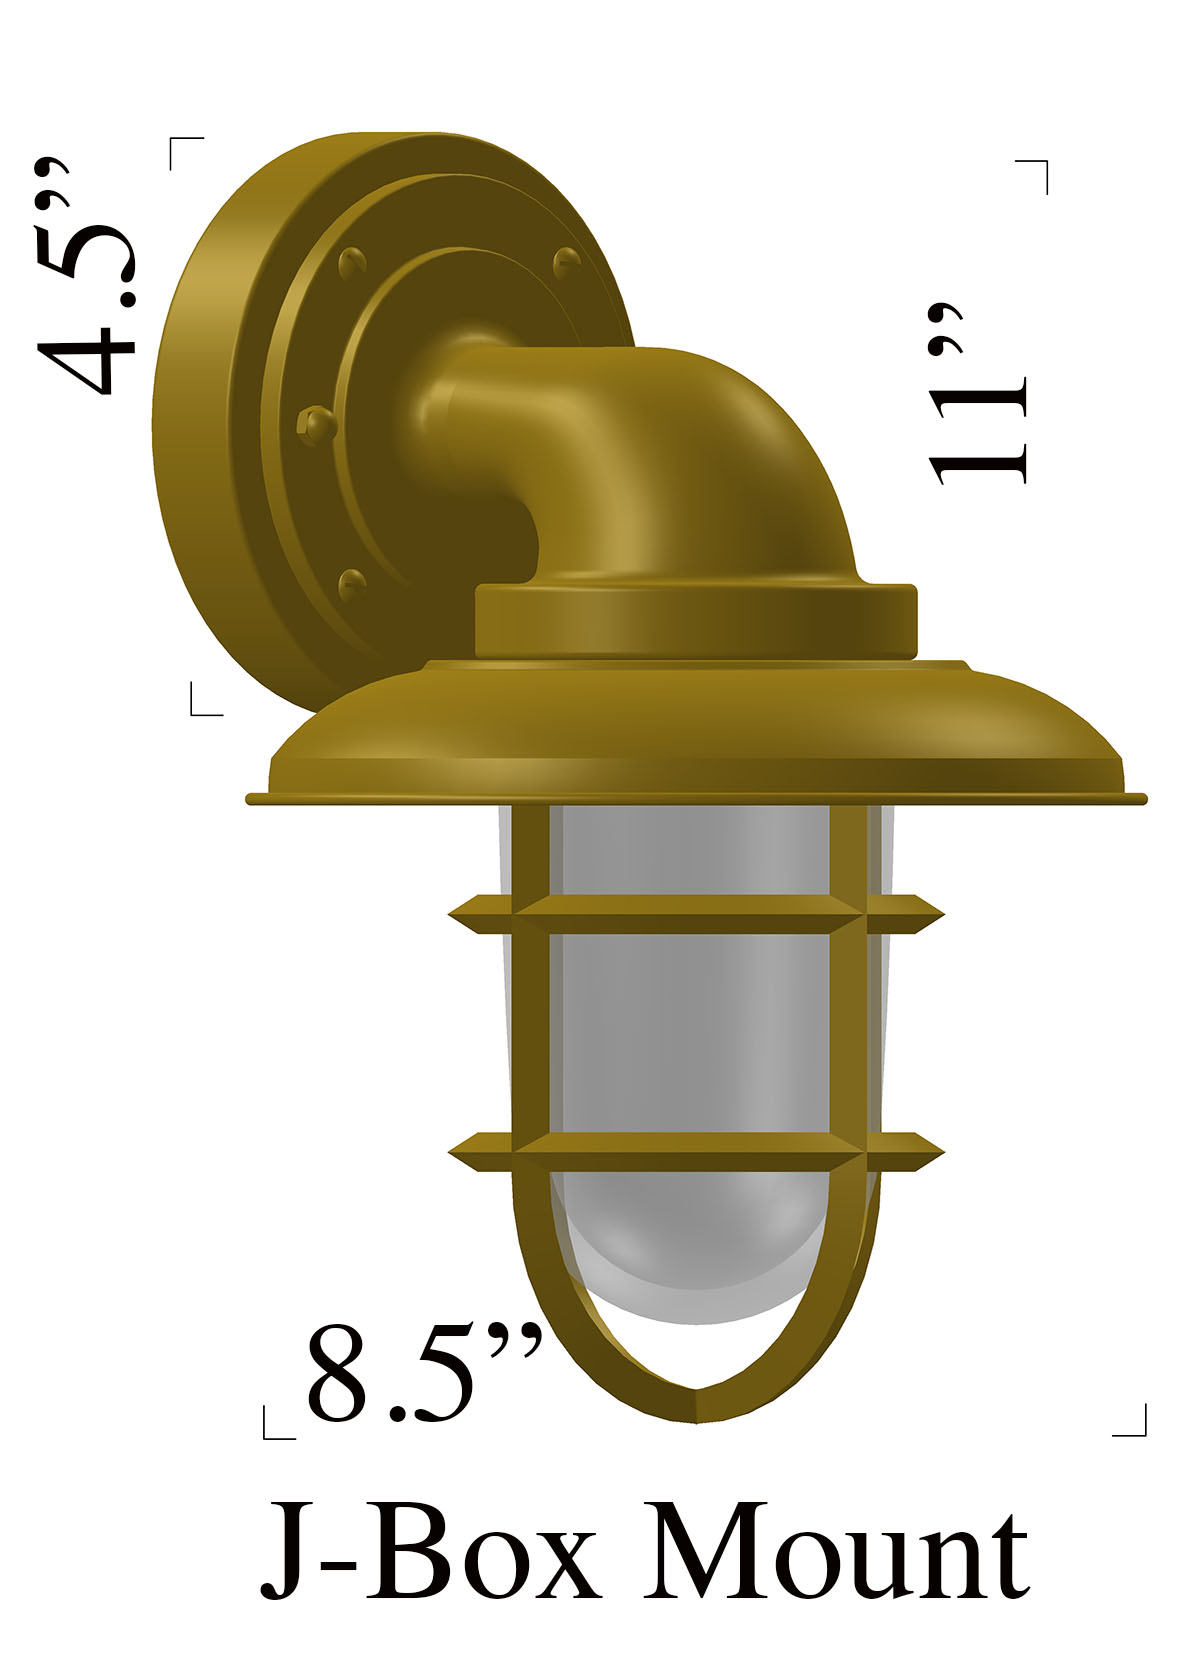 Marine Grade Brass Bulkhead Light w/ Hood (T-8)